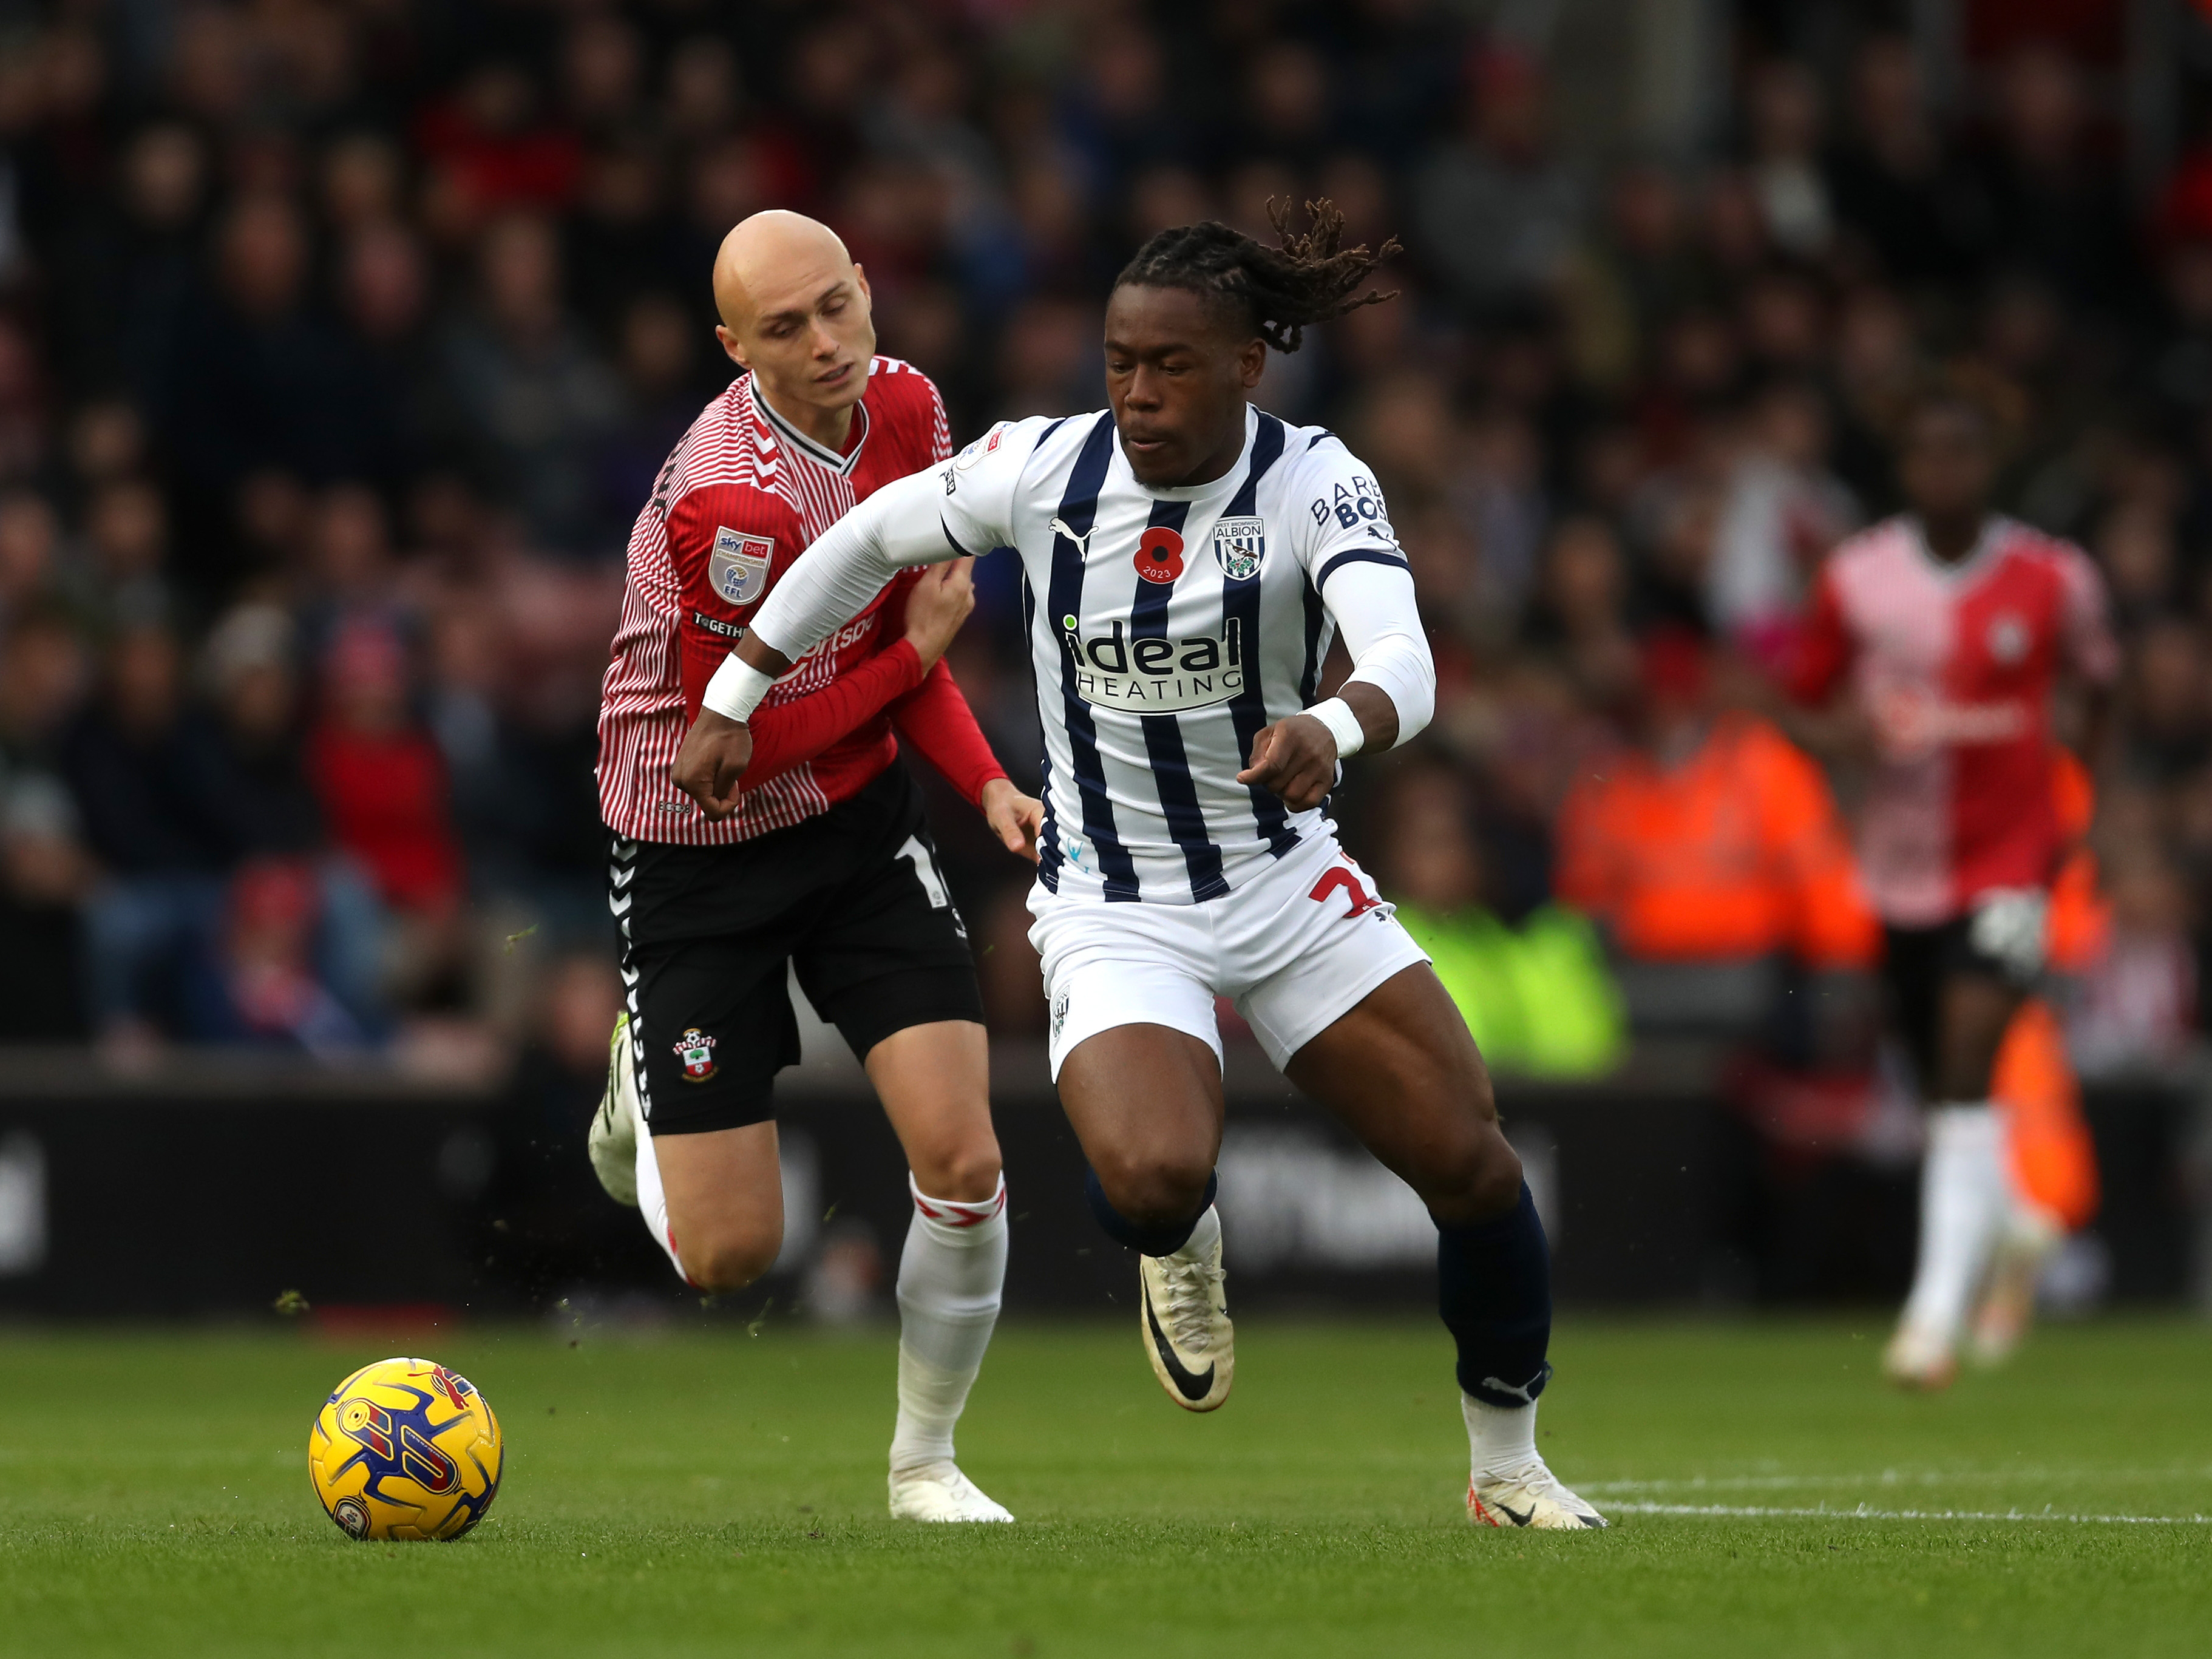 Brandon Thomas-Asante chases the ball down during Southampton v Albion